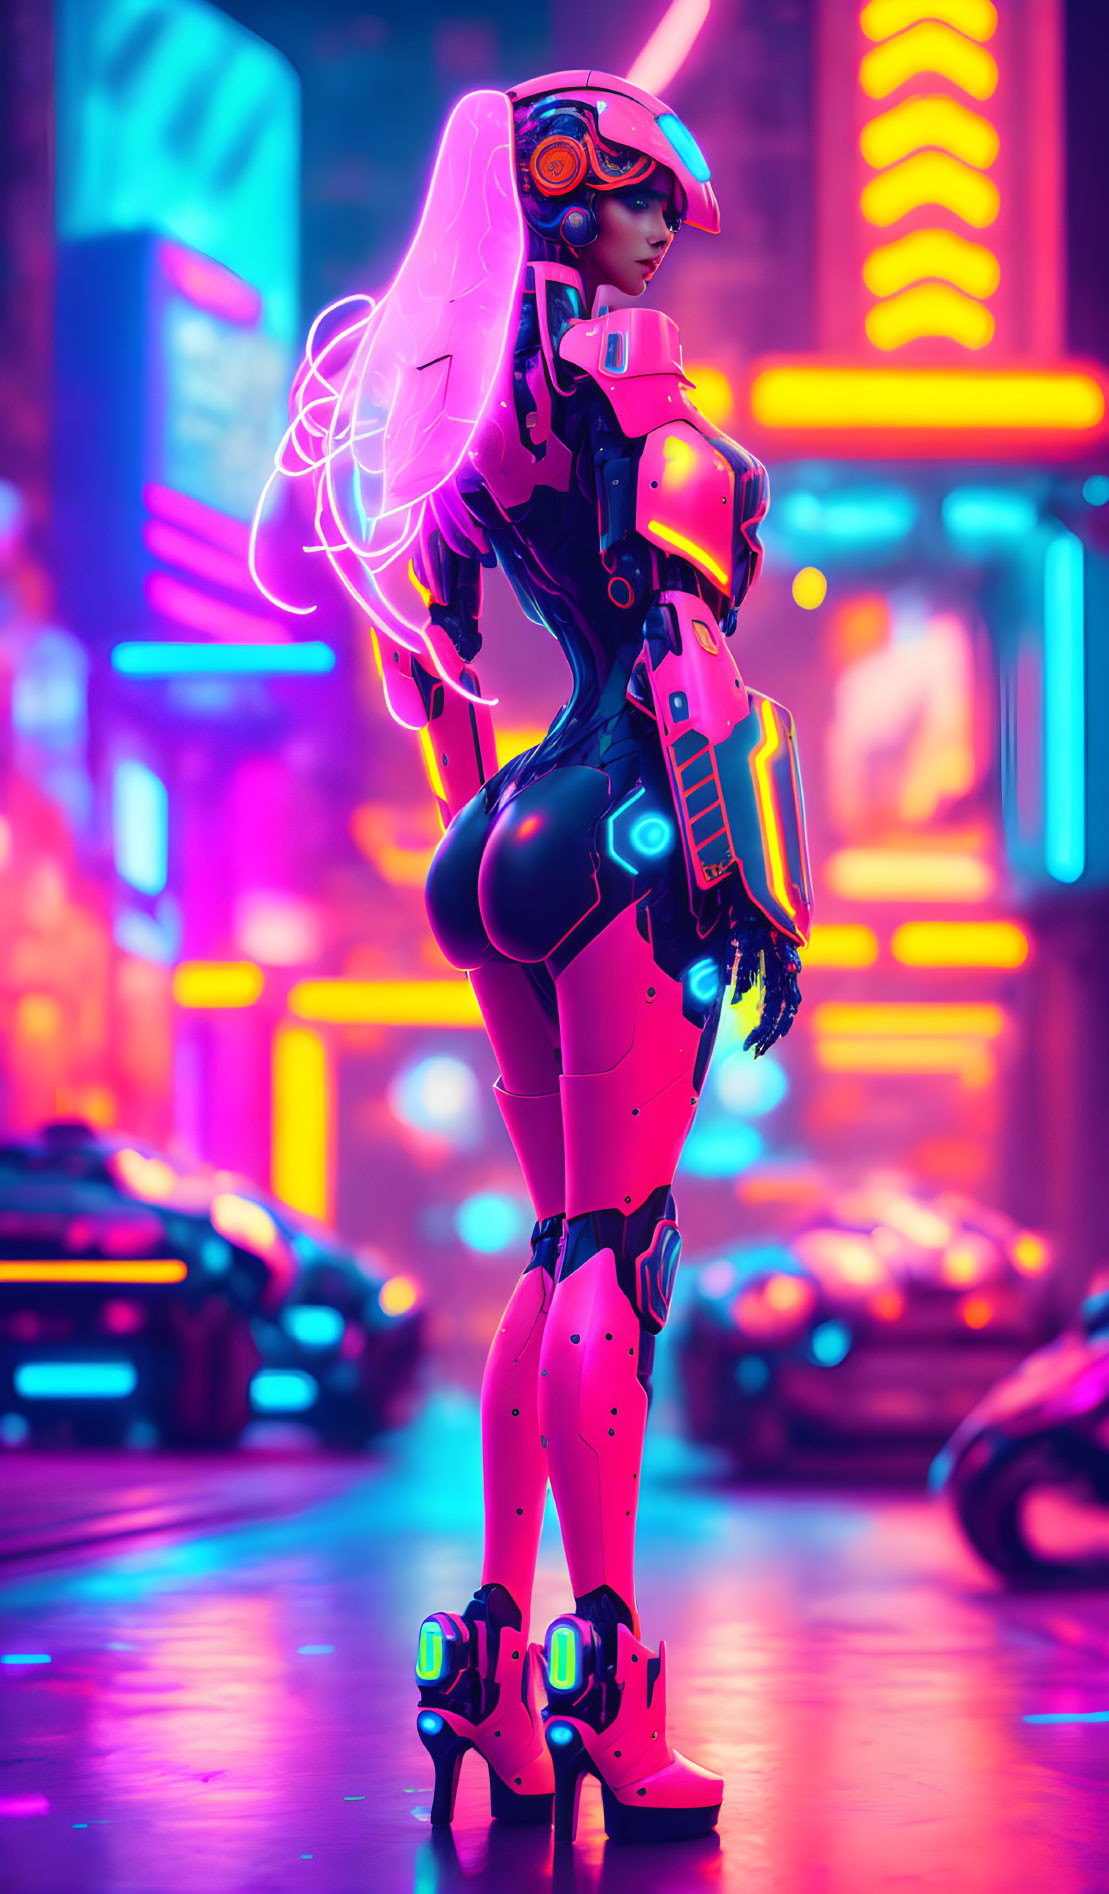 Futuristic Female Robot in Neon Cyberpunk City at Night